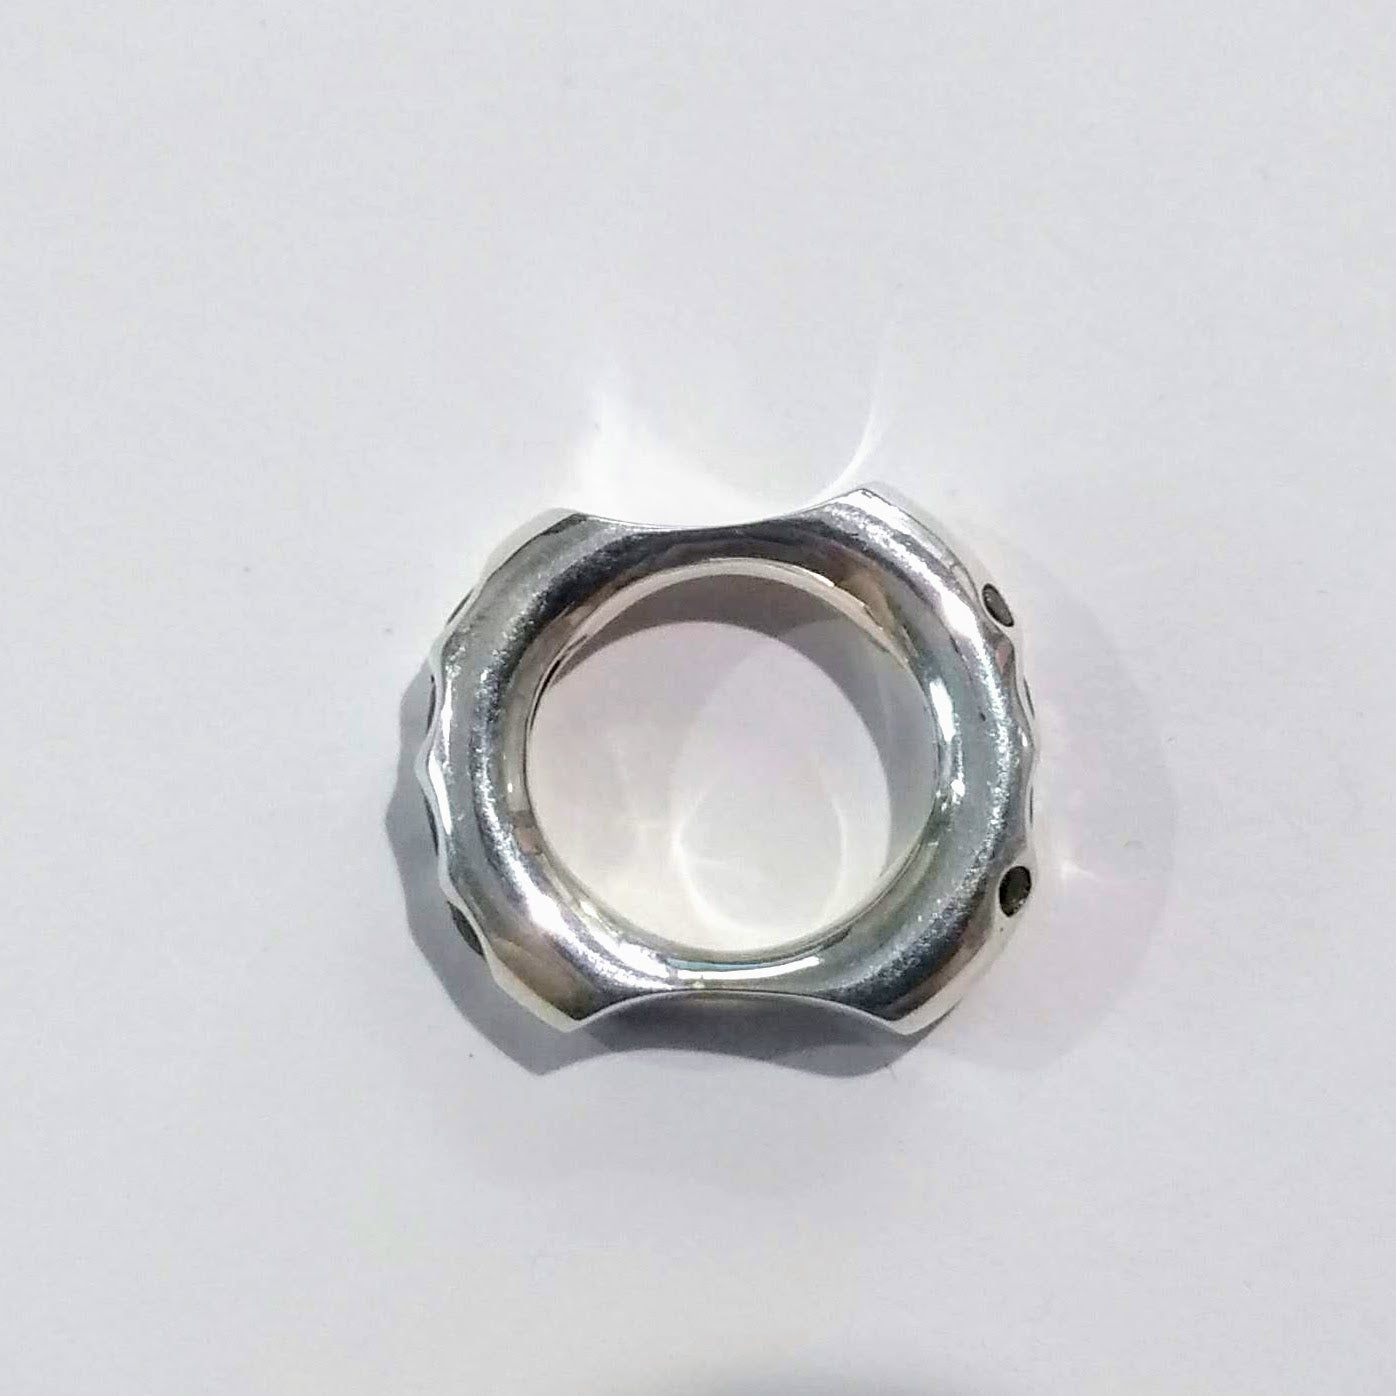 RSD-100 Spider Eye Ring with Tsavorite & Pyrope Garnets